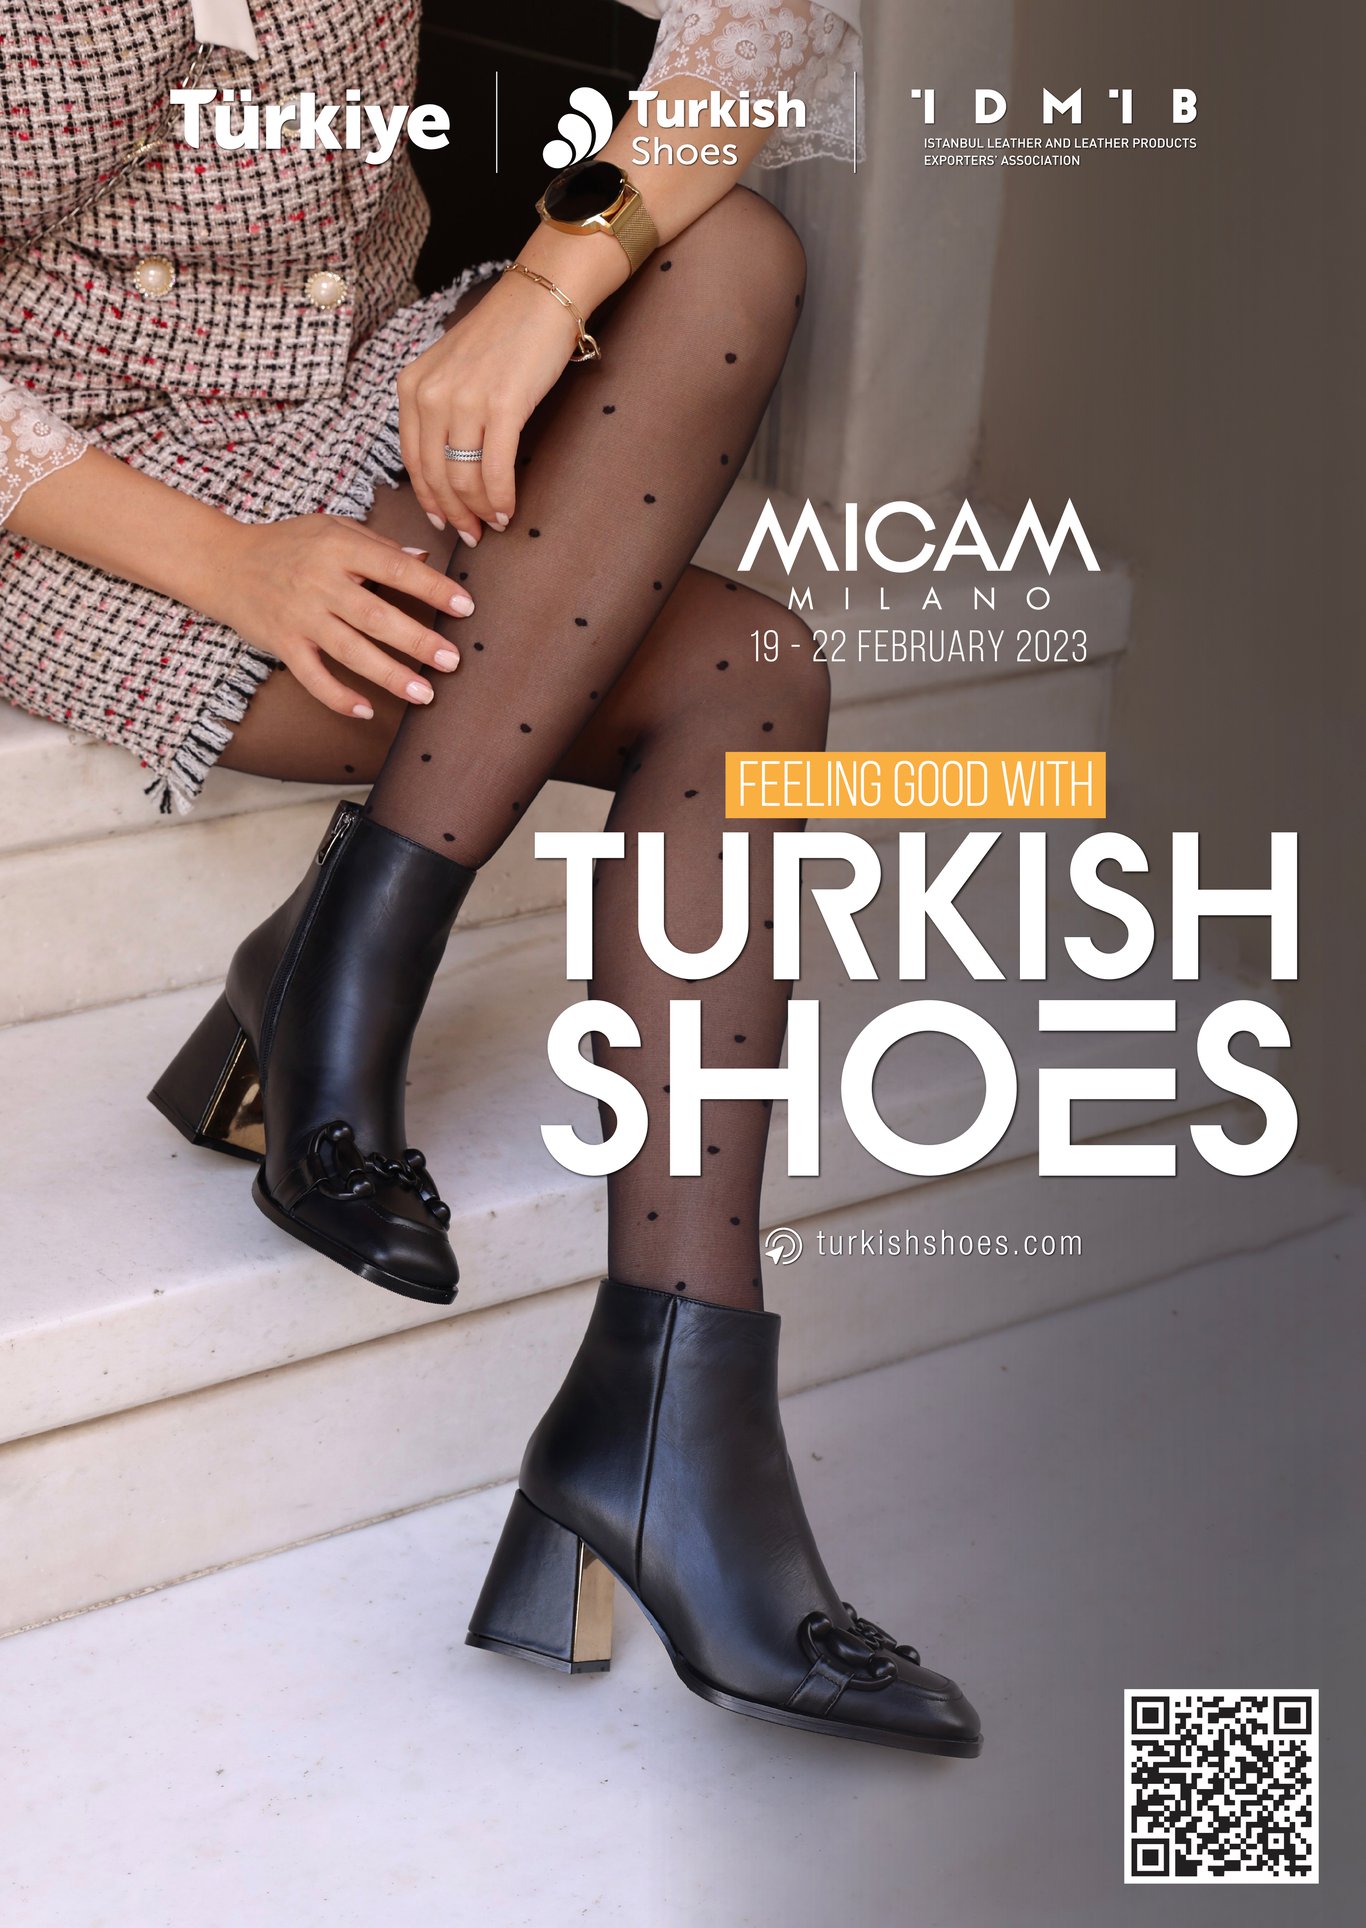 Turkish Shoes @ MICAM 2023-1